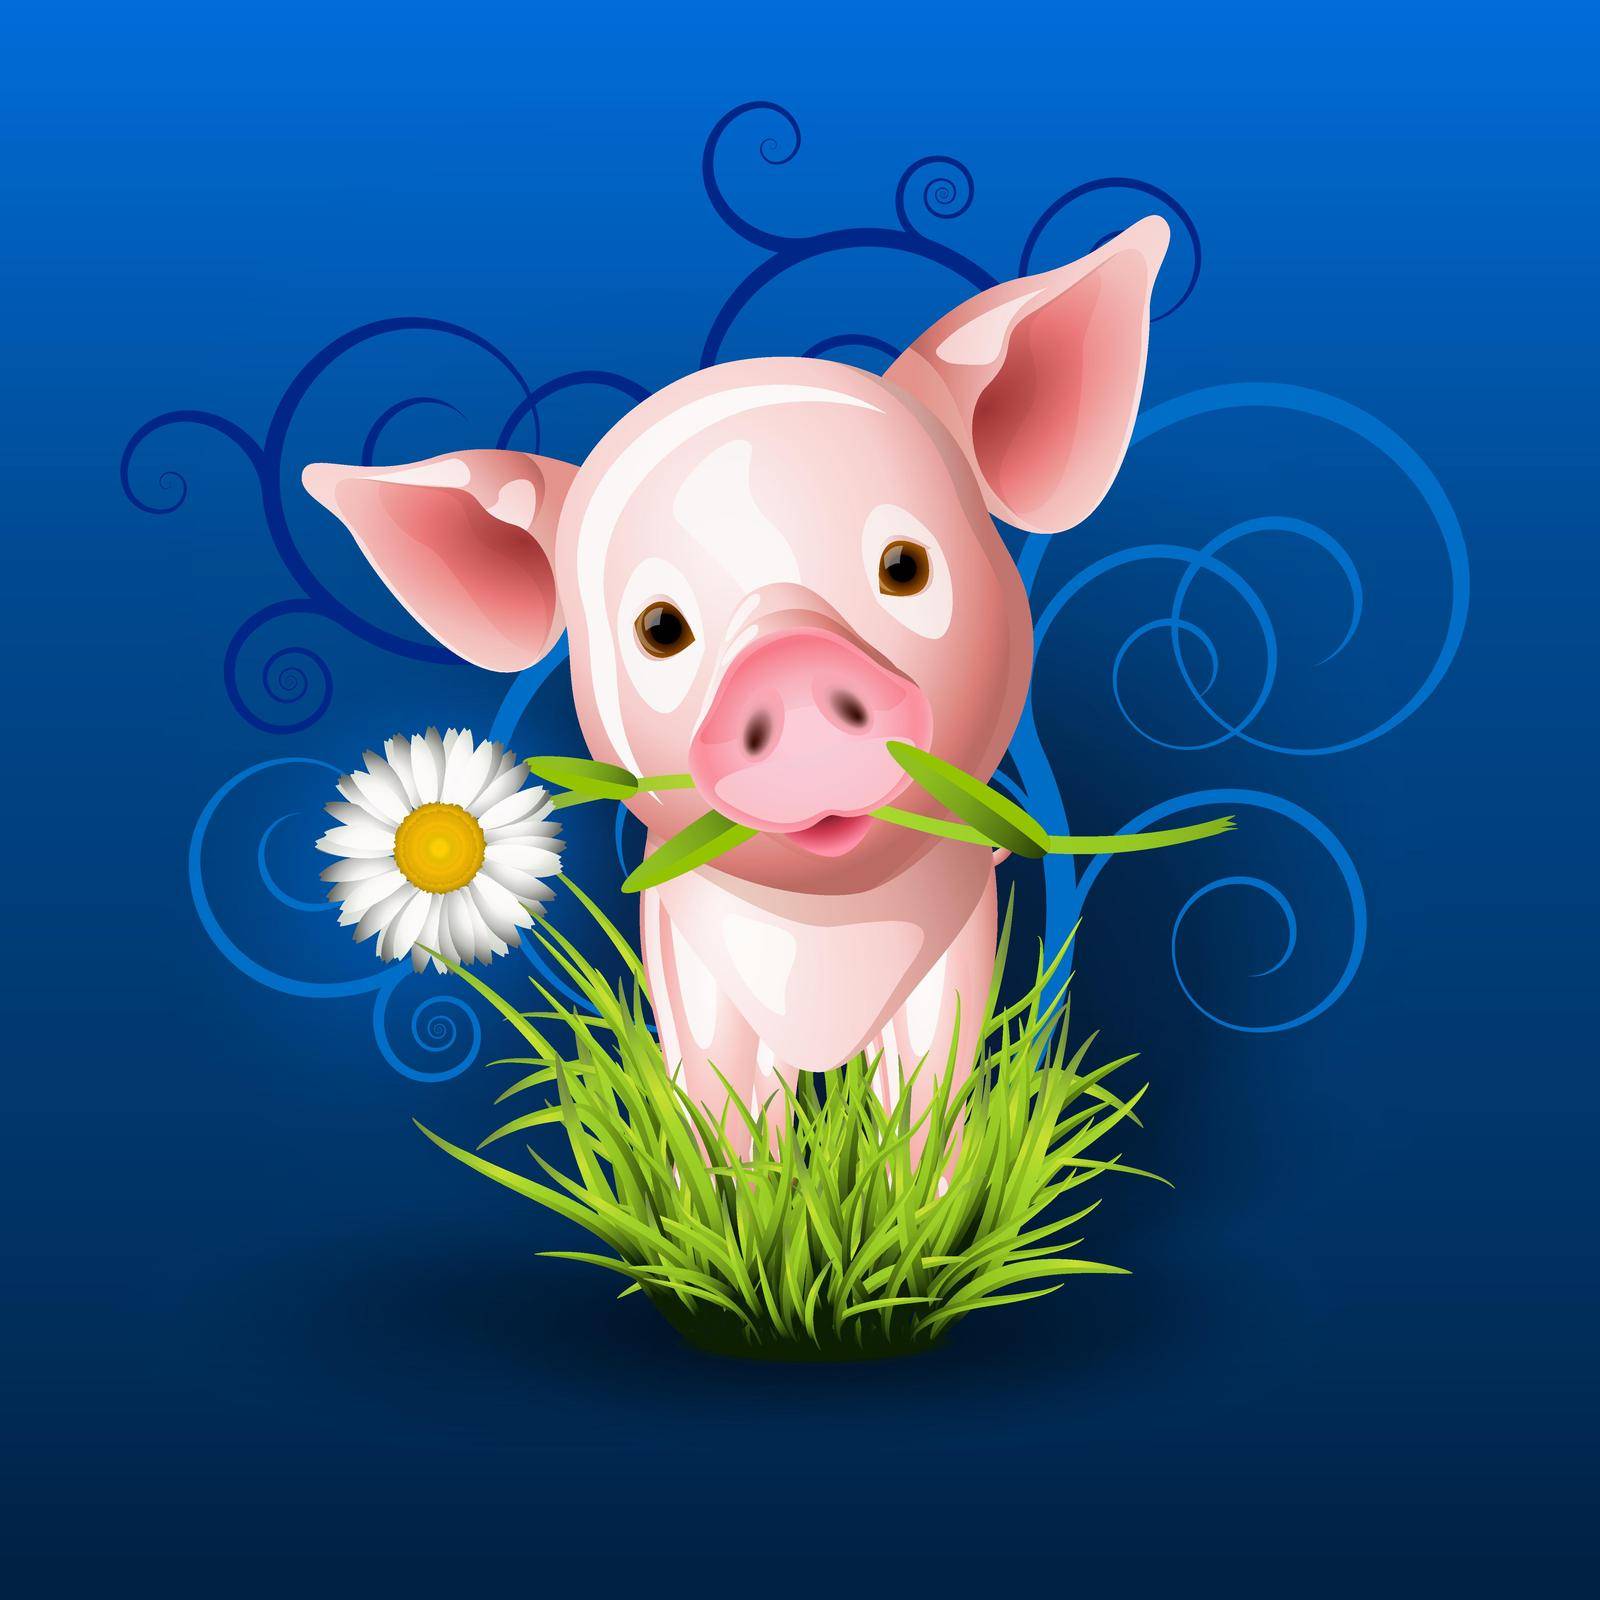 Little pink pig in green grass over blue